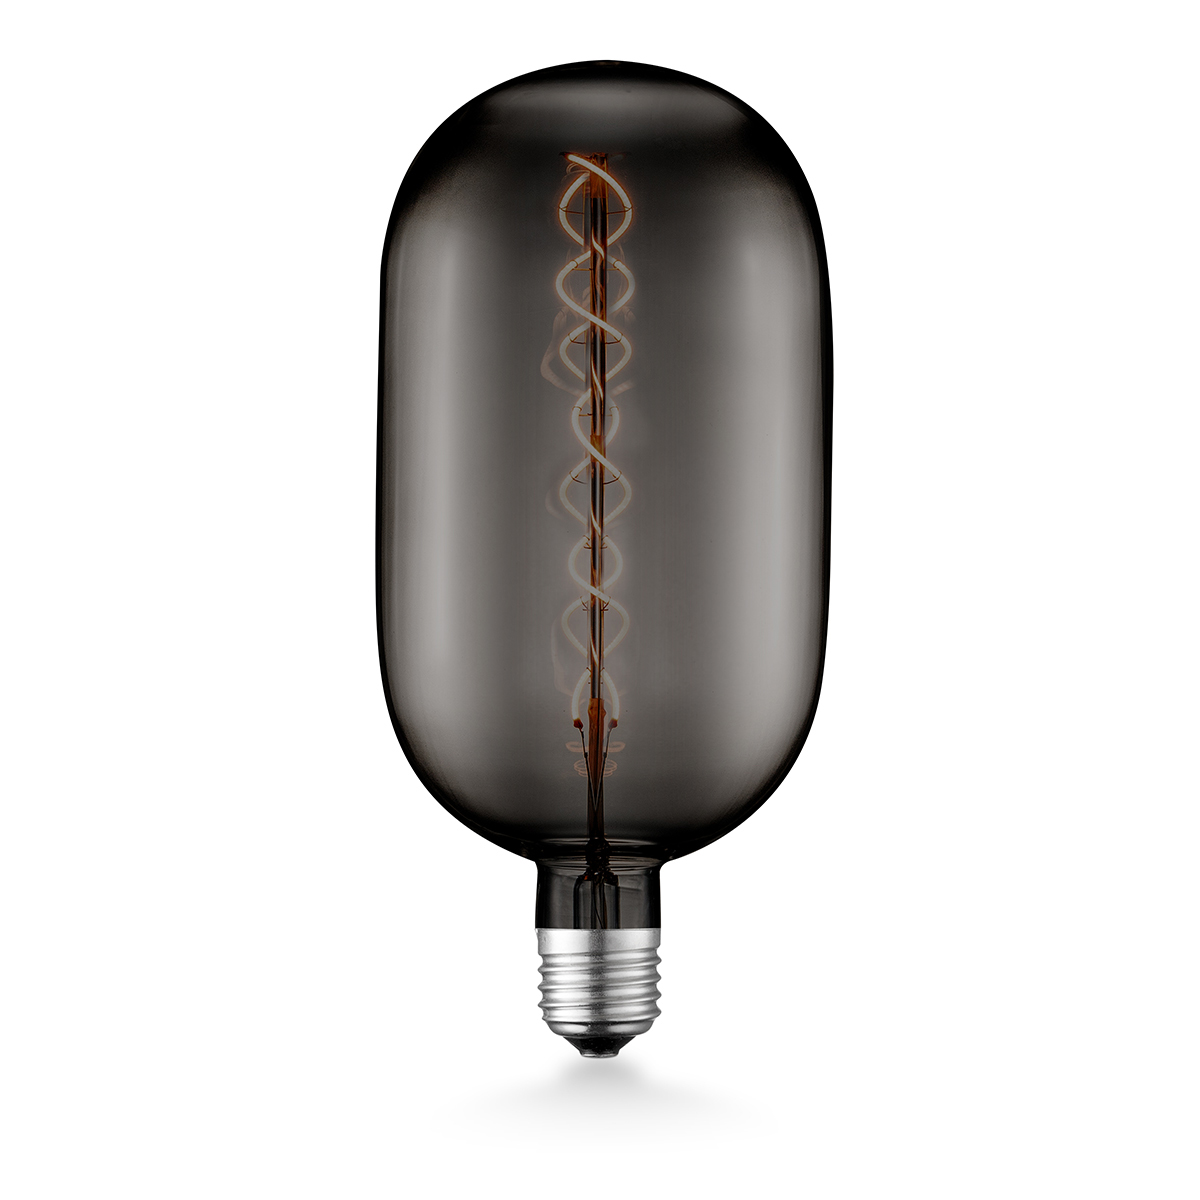 Tangla lighting - TLB-8032-06TM - LED Light Bulb Double Spiral filament - special 4W titanium - medium - sleek - dimmable - E27